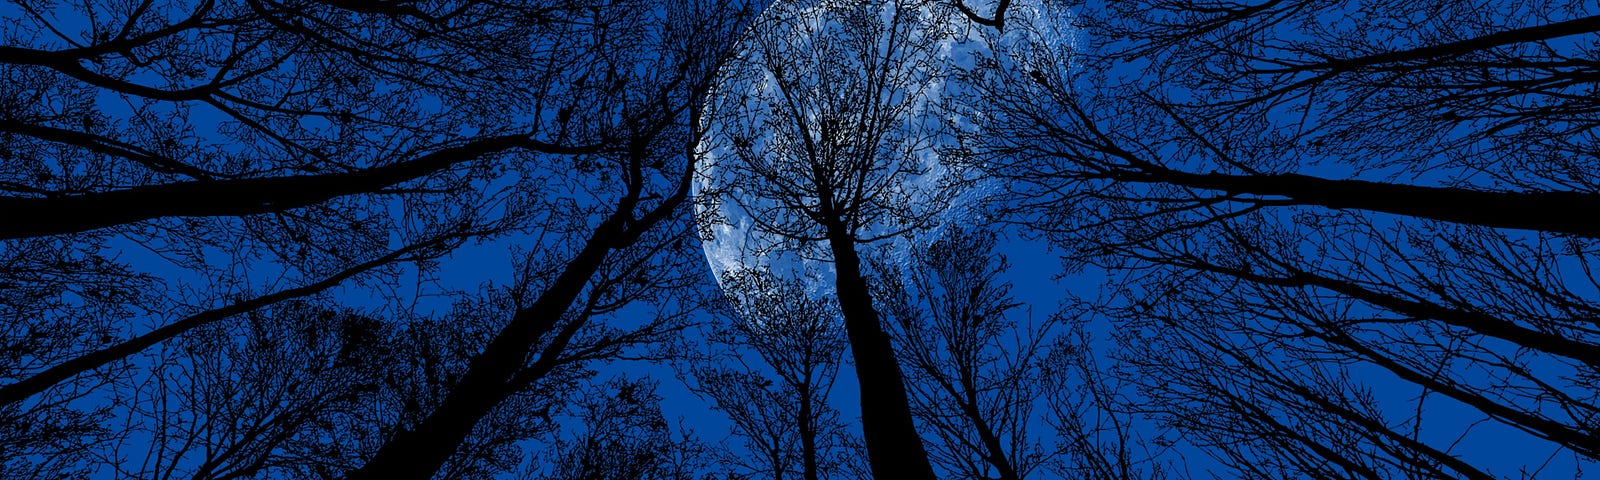 Moonlight in the darkened trees